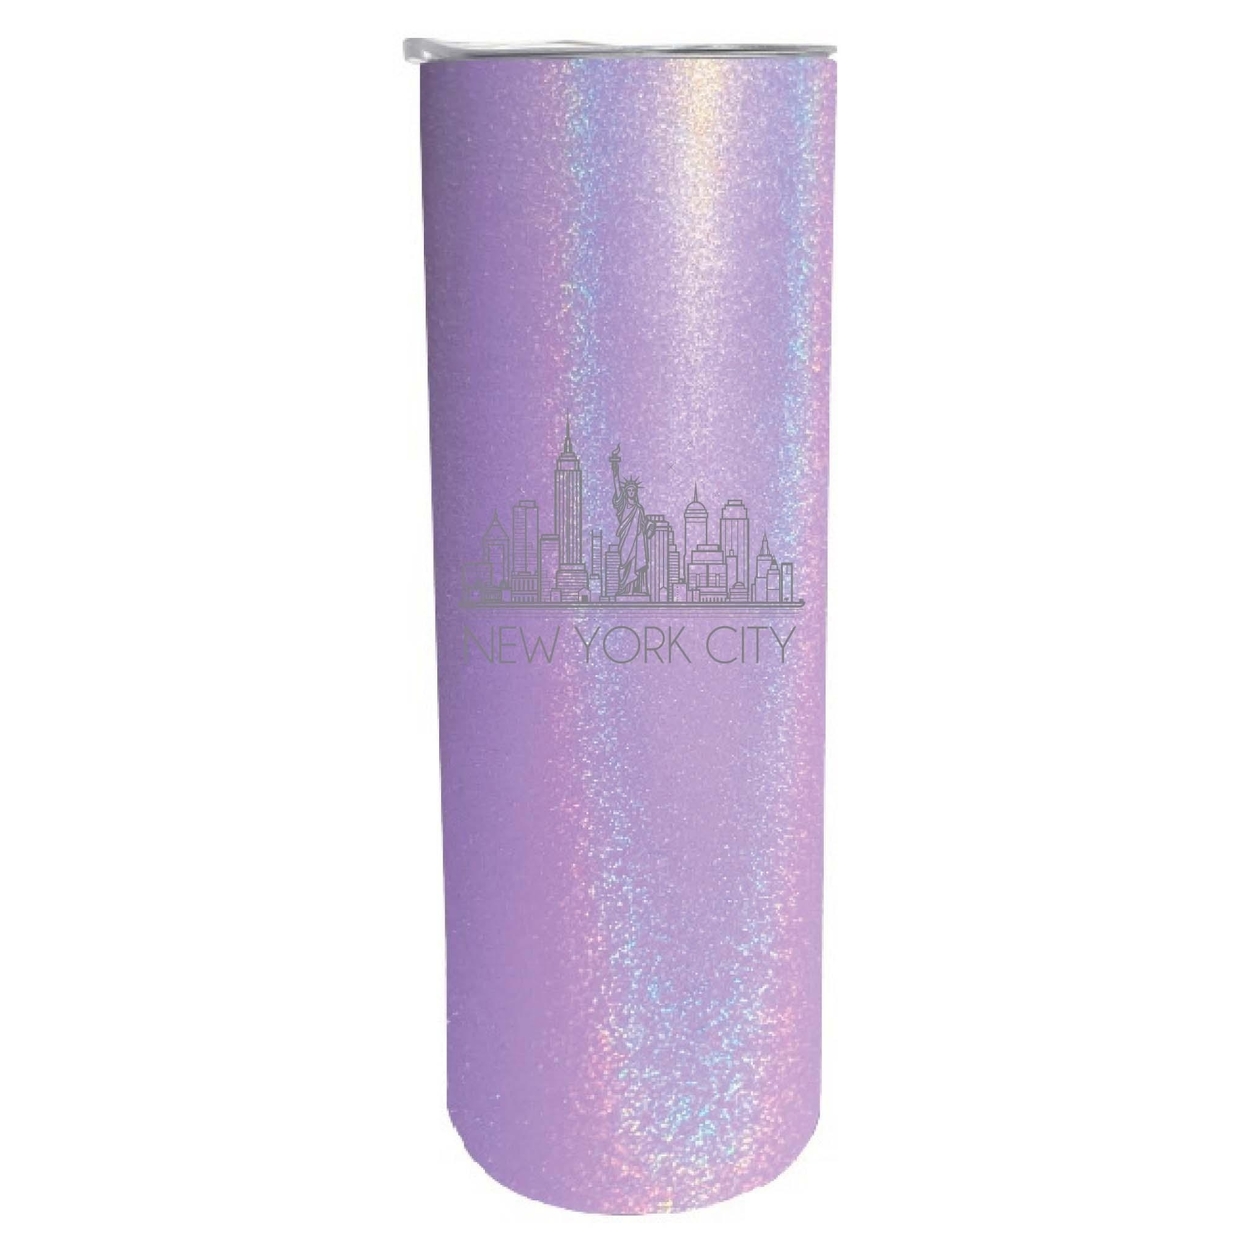 New York City Souvenir 20 Oz Engraved Insulated Skinny Tumbler Glitter - Purple Glitter,,Single Unit